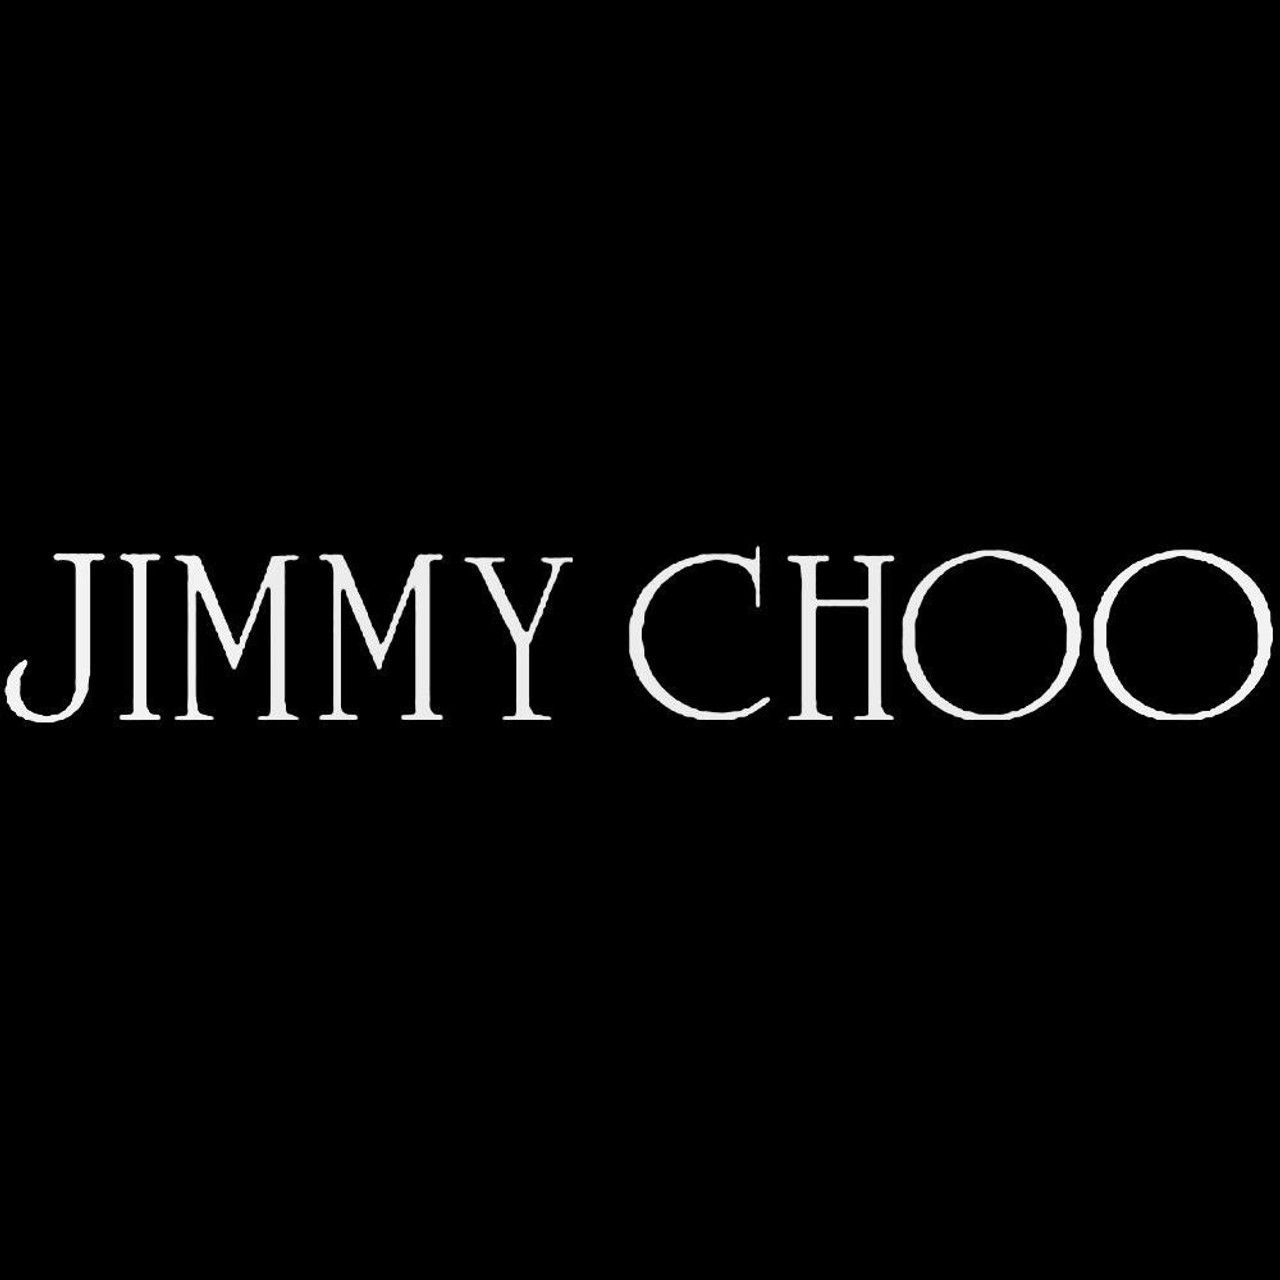 Jimmy Choo Logofree Decal Sticker